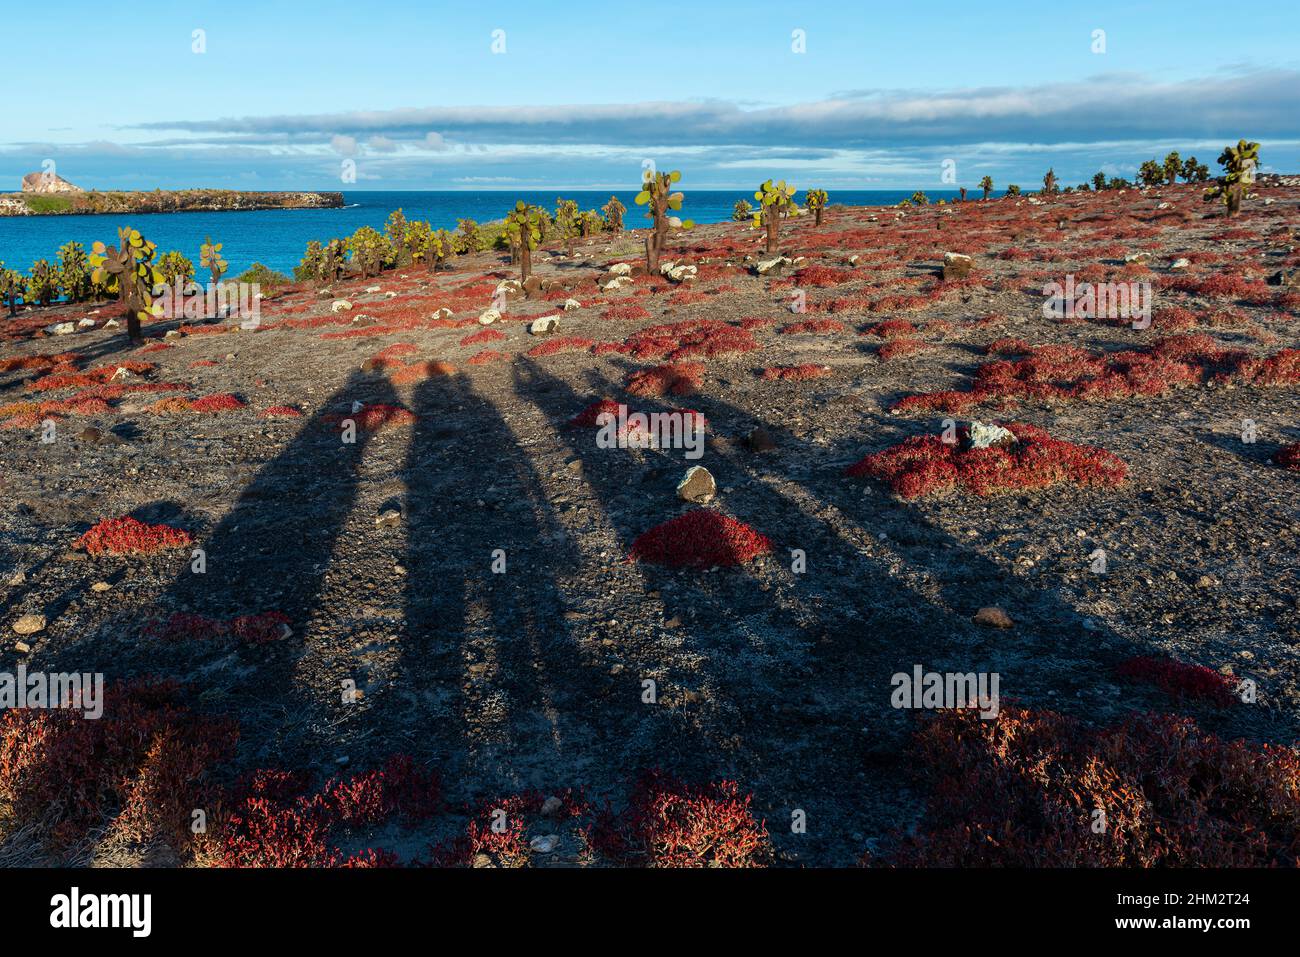 Schatten der Touristen auf der Galapagos South Plaza Insel bei Sonnenuntergang mit Kaktus aus Kaktus und roter Sesuviumpflanze, Galapagos Nationalpark, Ecuador. Stockfoto